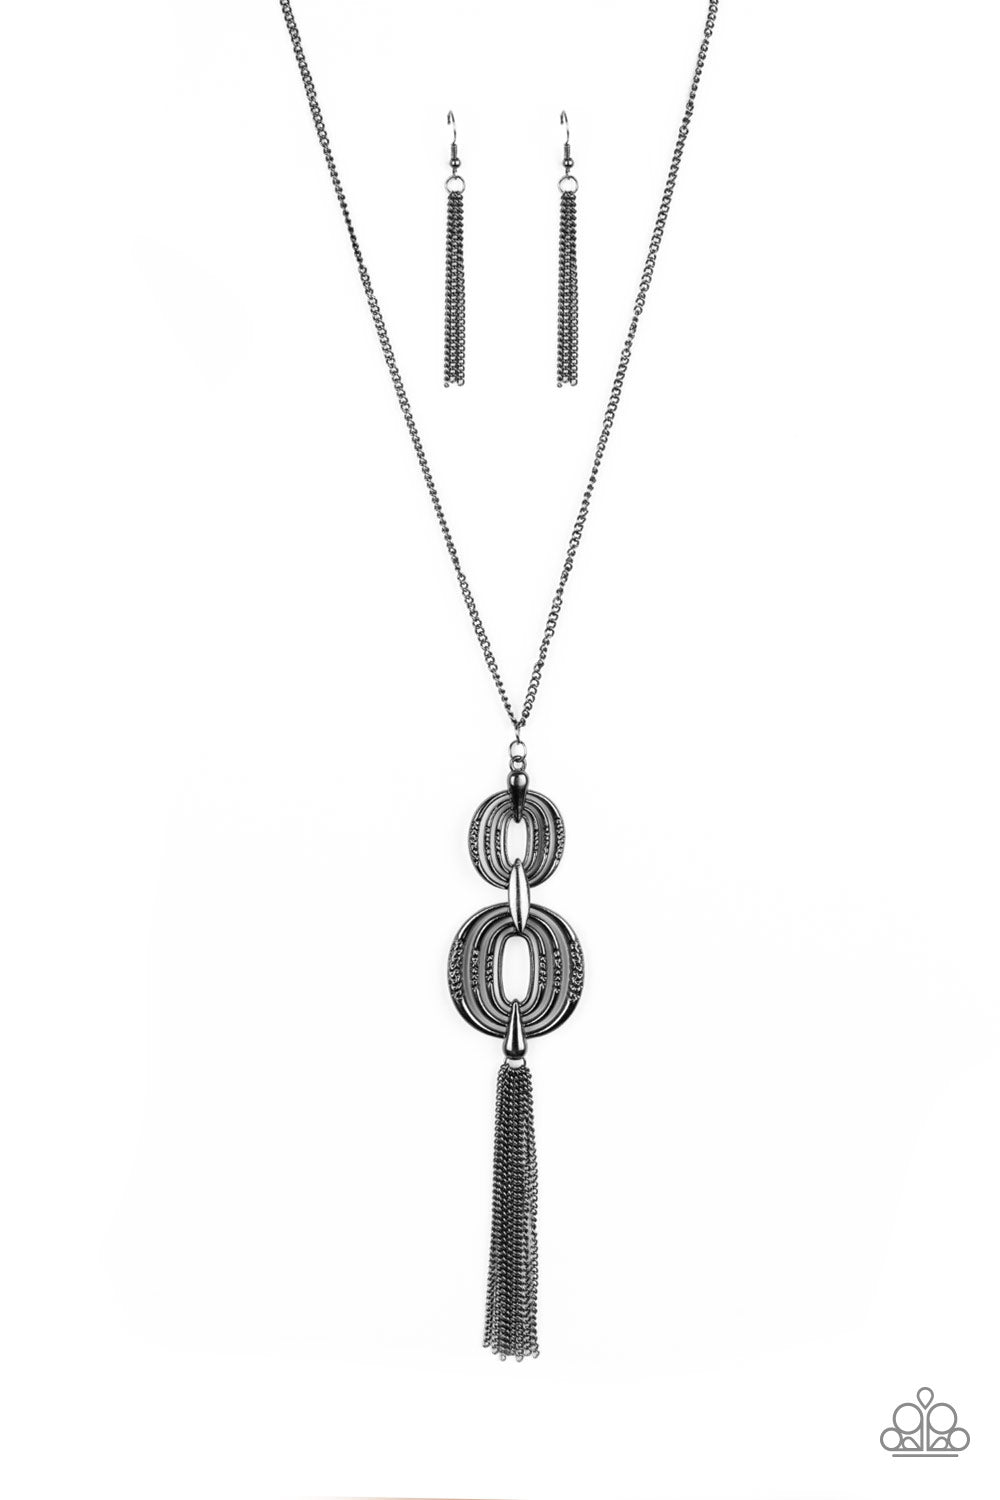 Timelessly Tasseled - Black Necklace freeshipping - JewLz4u Gemstone Gallery